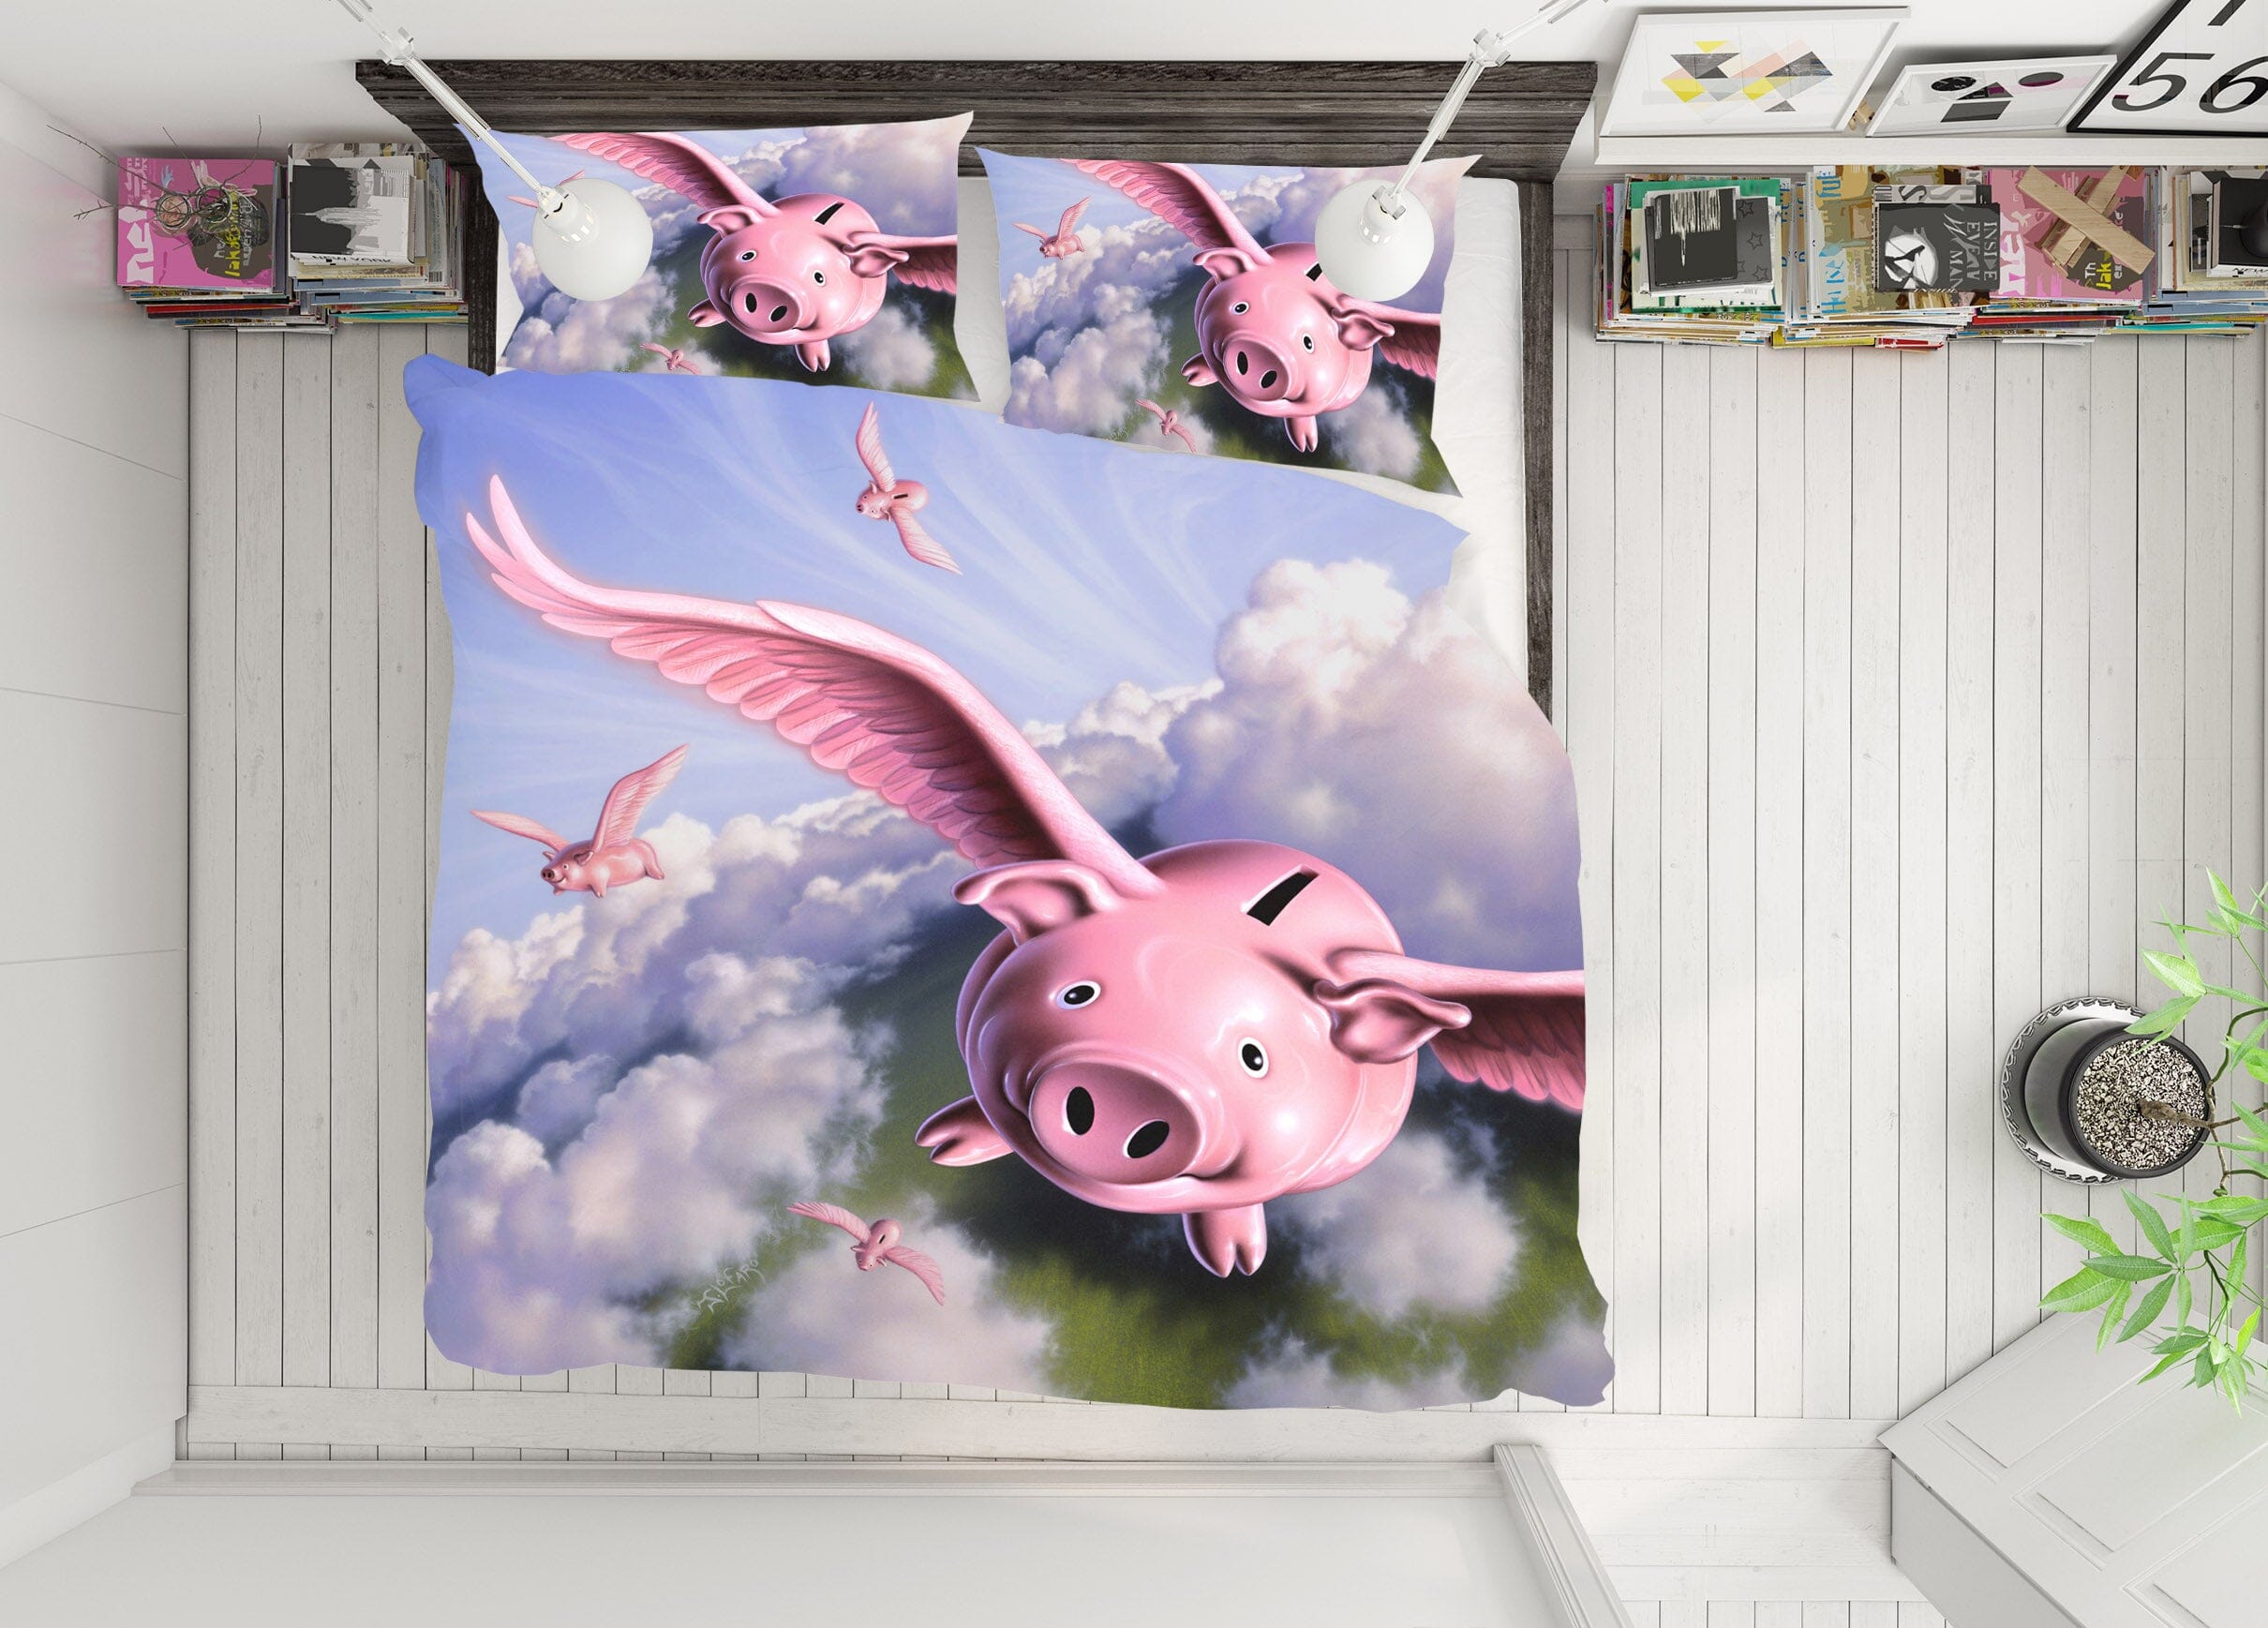 3D Piggies 2107 Jerry LoFaro bedding Bed Pillowcases Quilt Quiet Covers AJ Creativity Home 